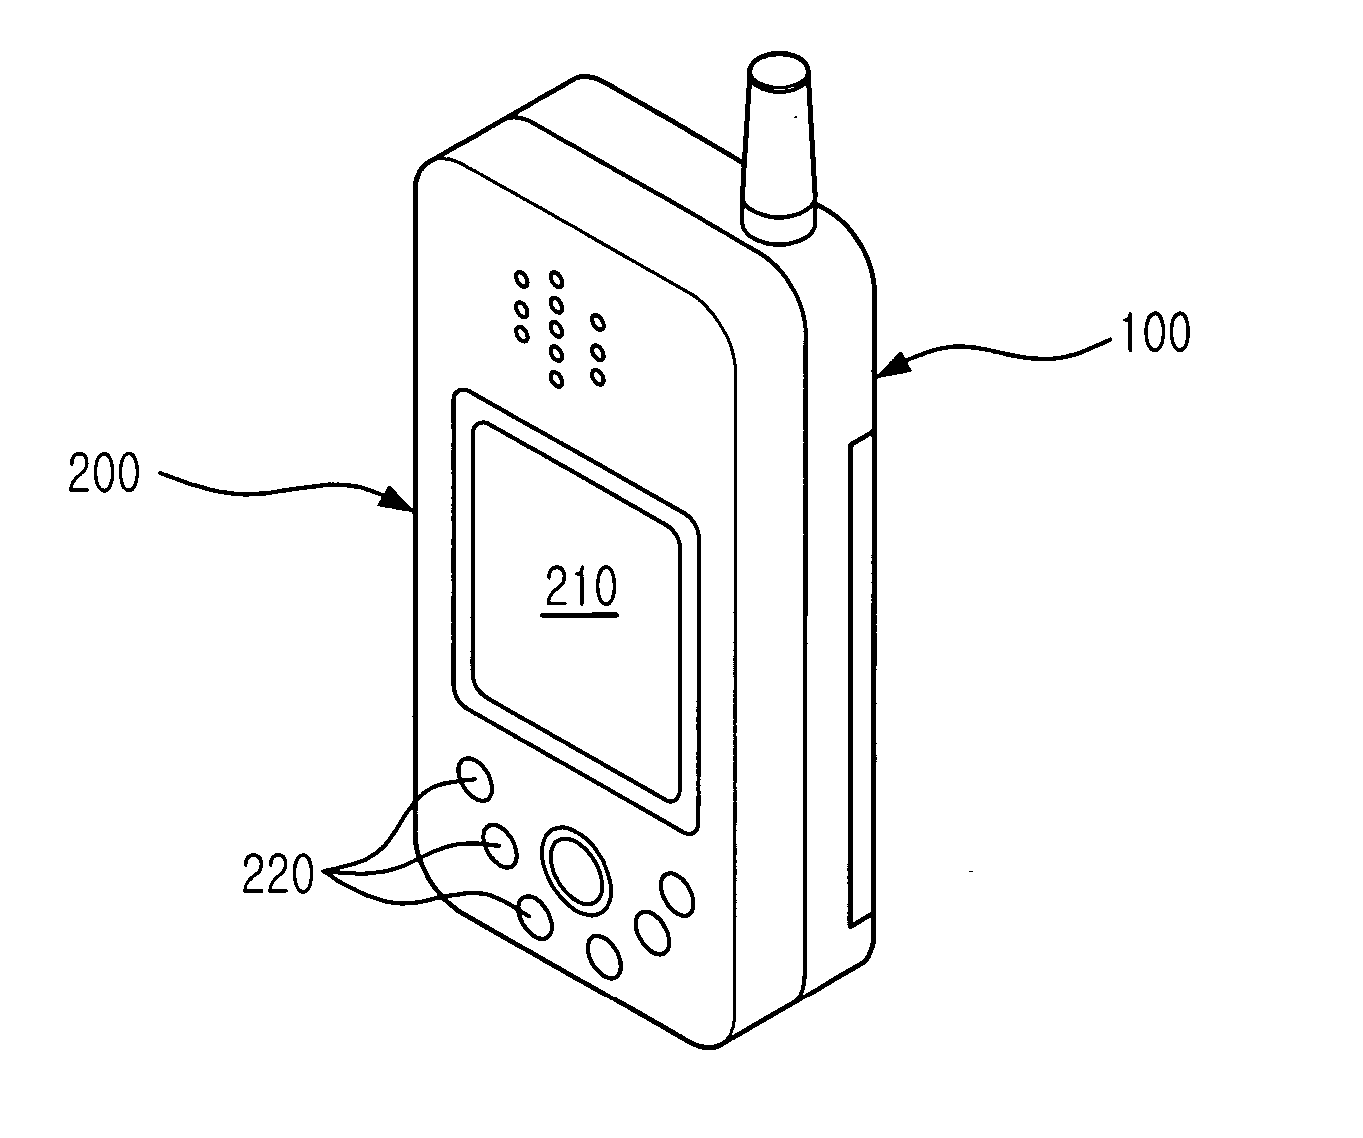 Sliding-type mobile communication terminal having camera interlocking device